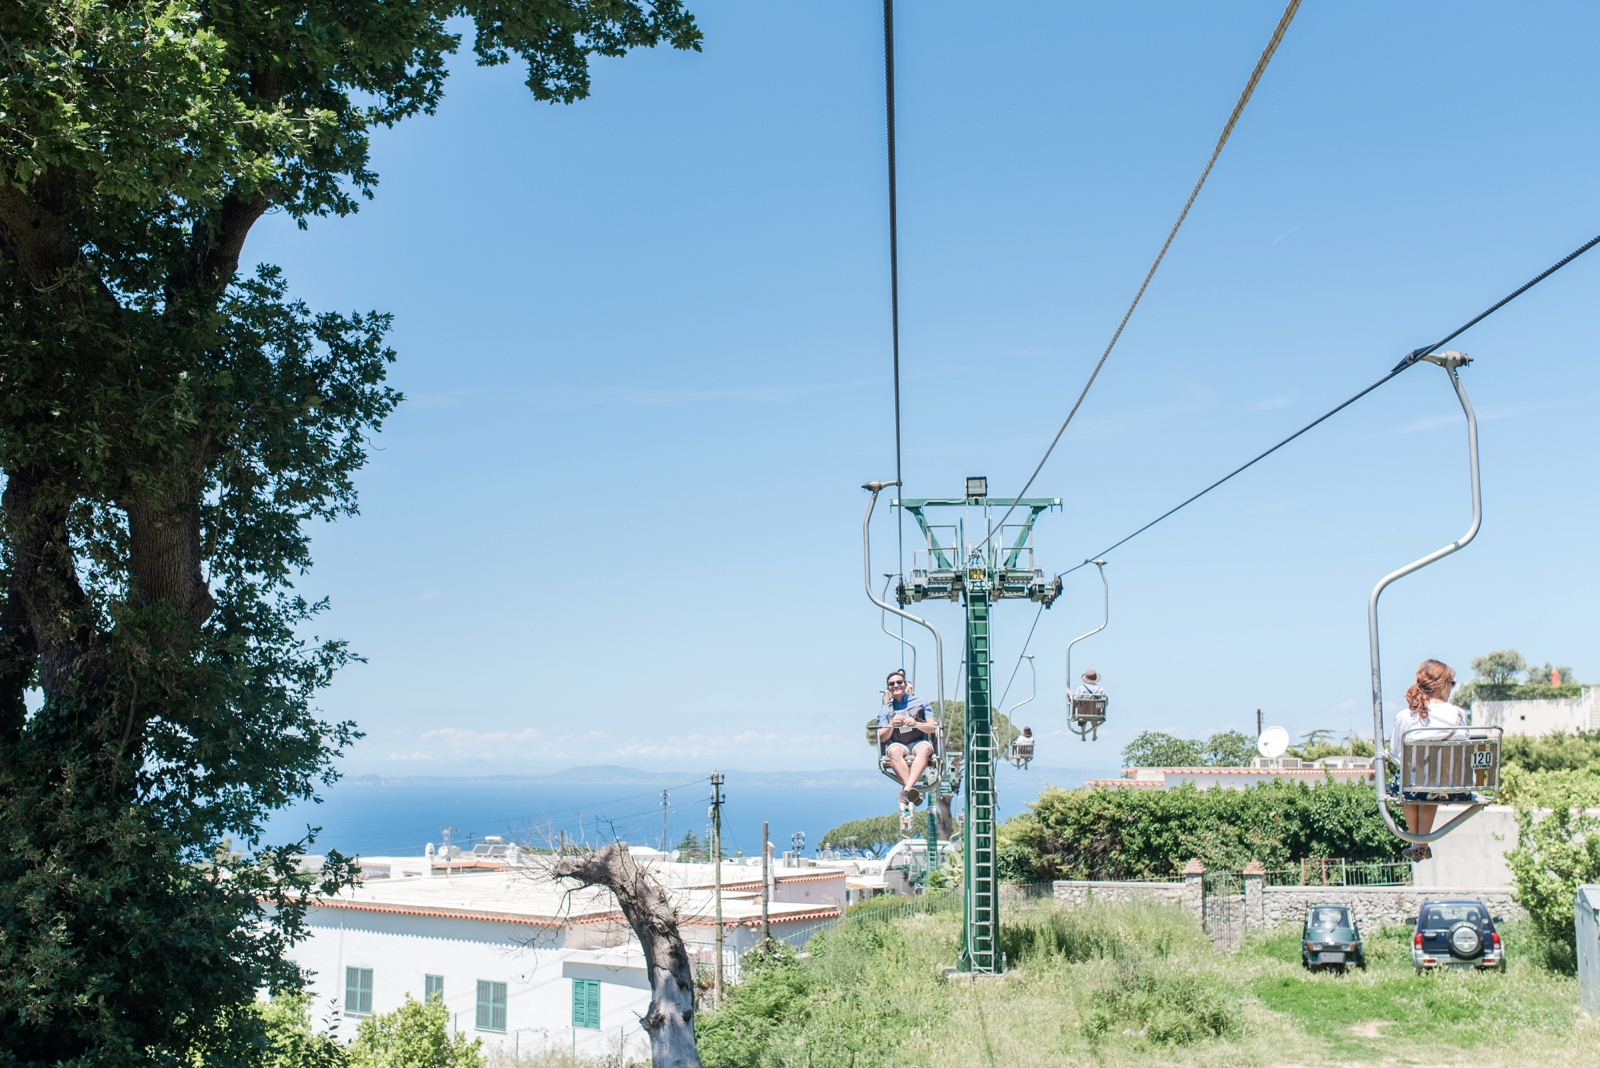 capri-italy-amalfi-coast-via-mediterranean-cruise-carnival-vista-photo_5571.jpg